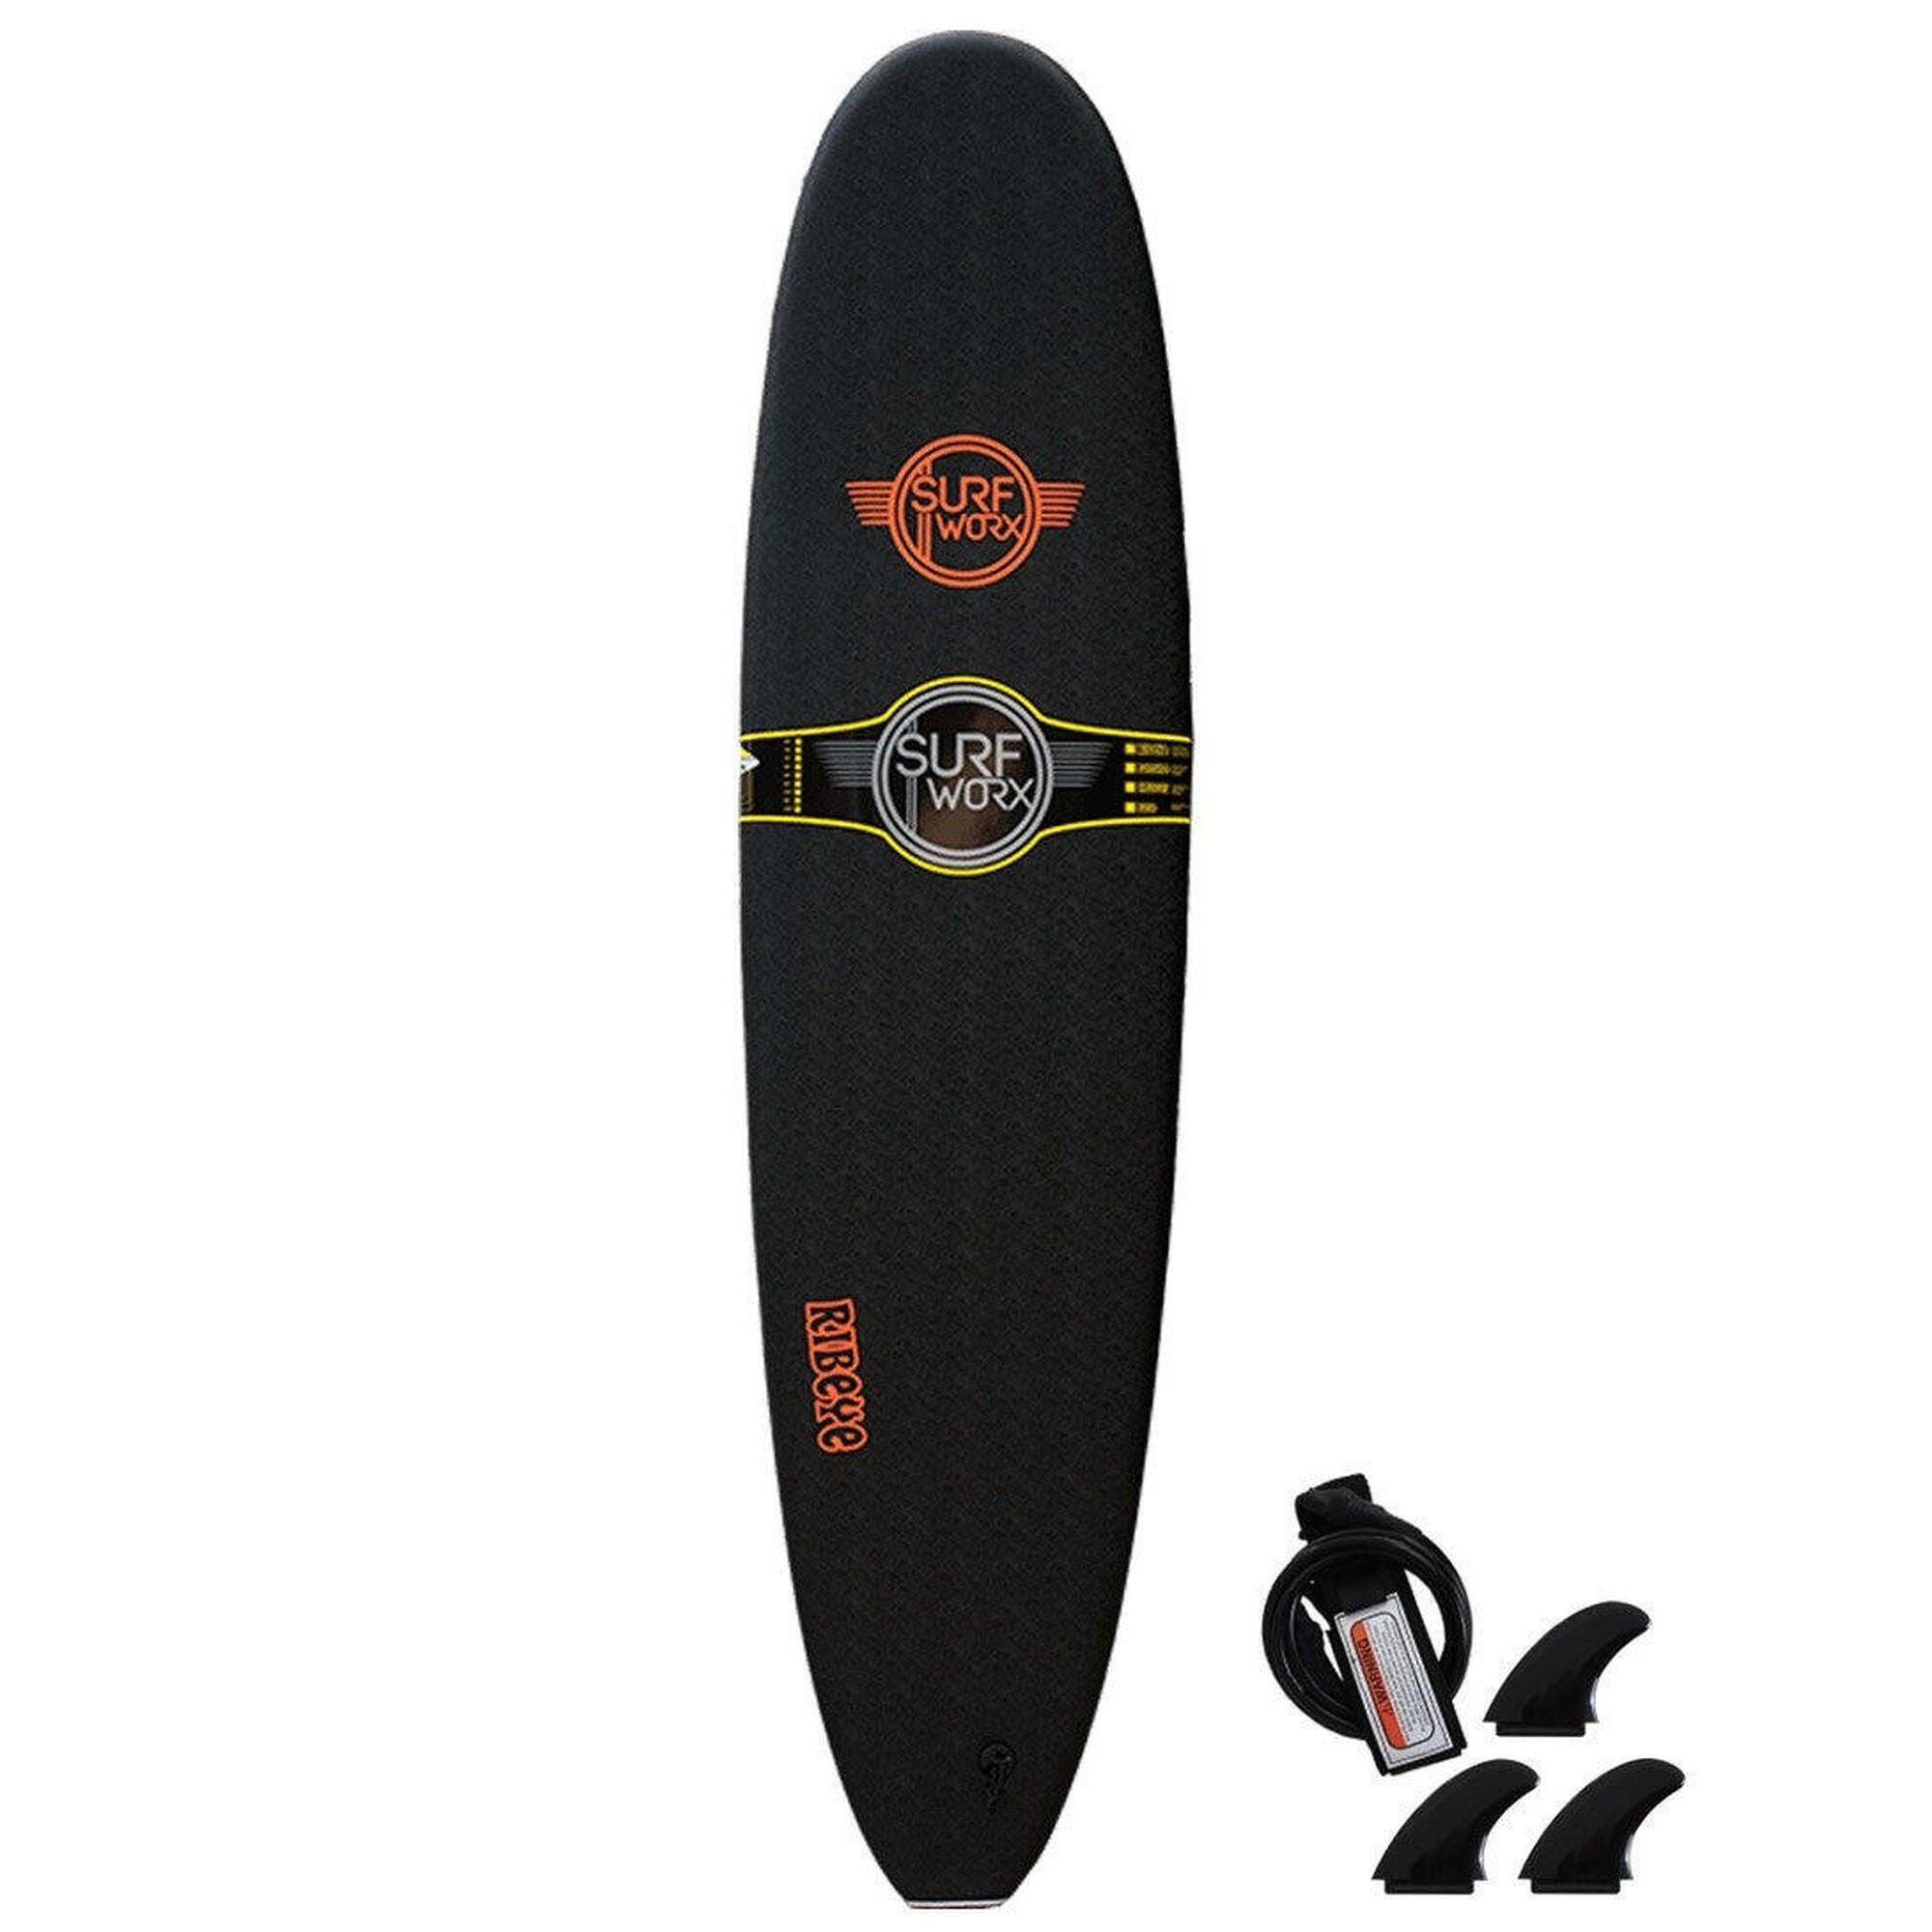 Surfworx Ribeye Mini Mal soft surfboard 7ft 0 Black 1/4